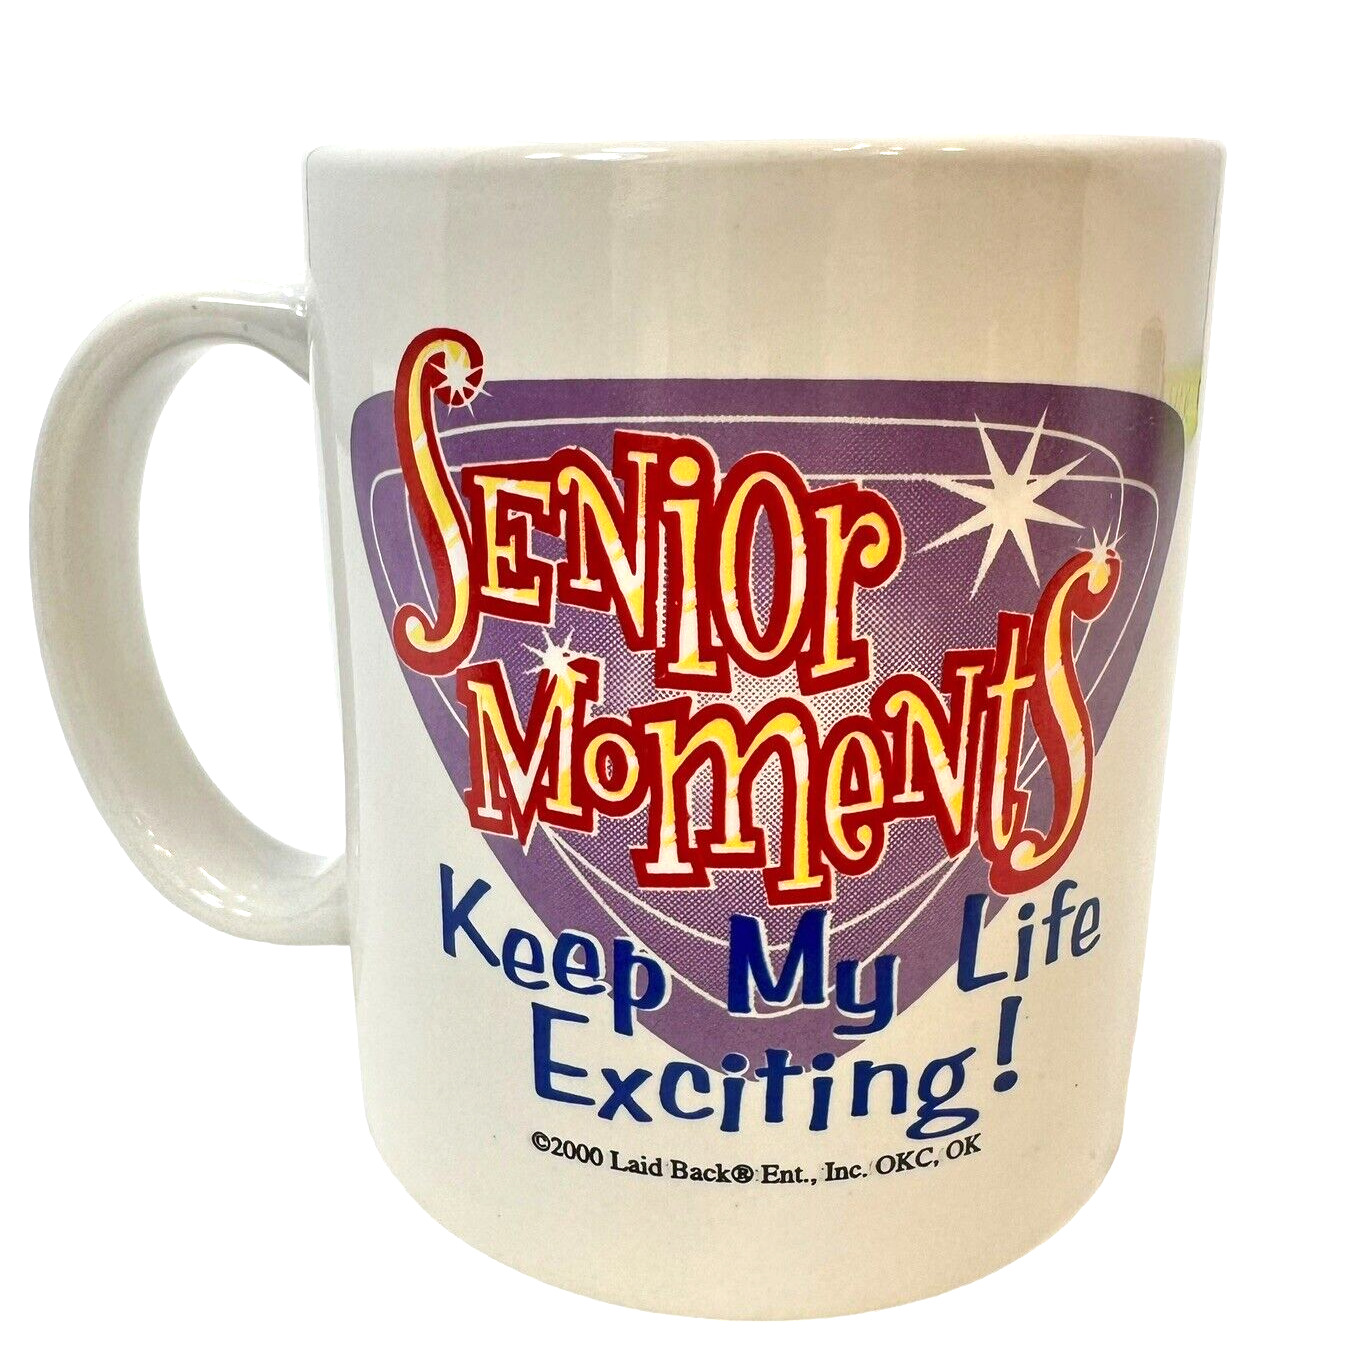 Laid Back Mug Senior Moments Keep My Life Exciting Coffee Cup 2000